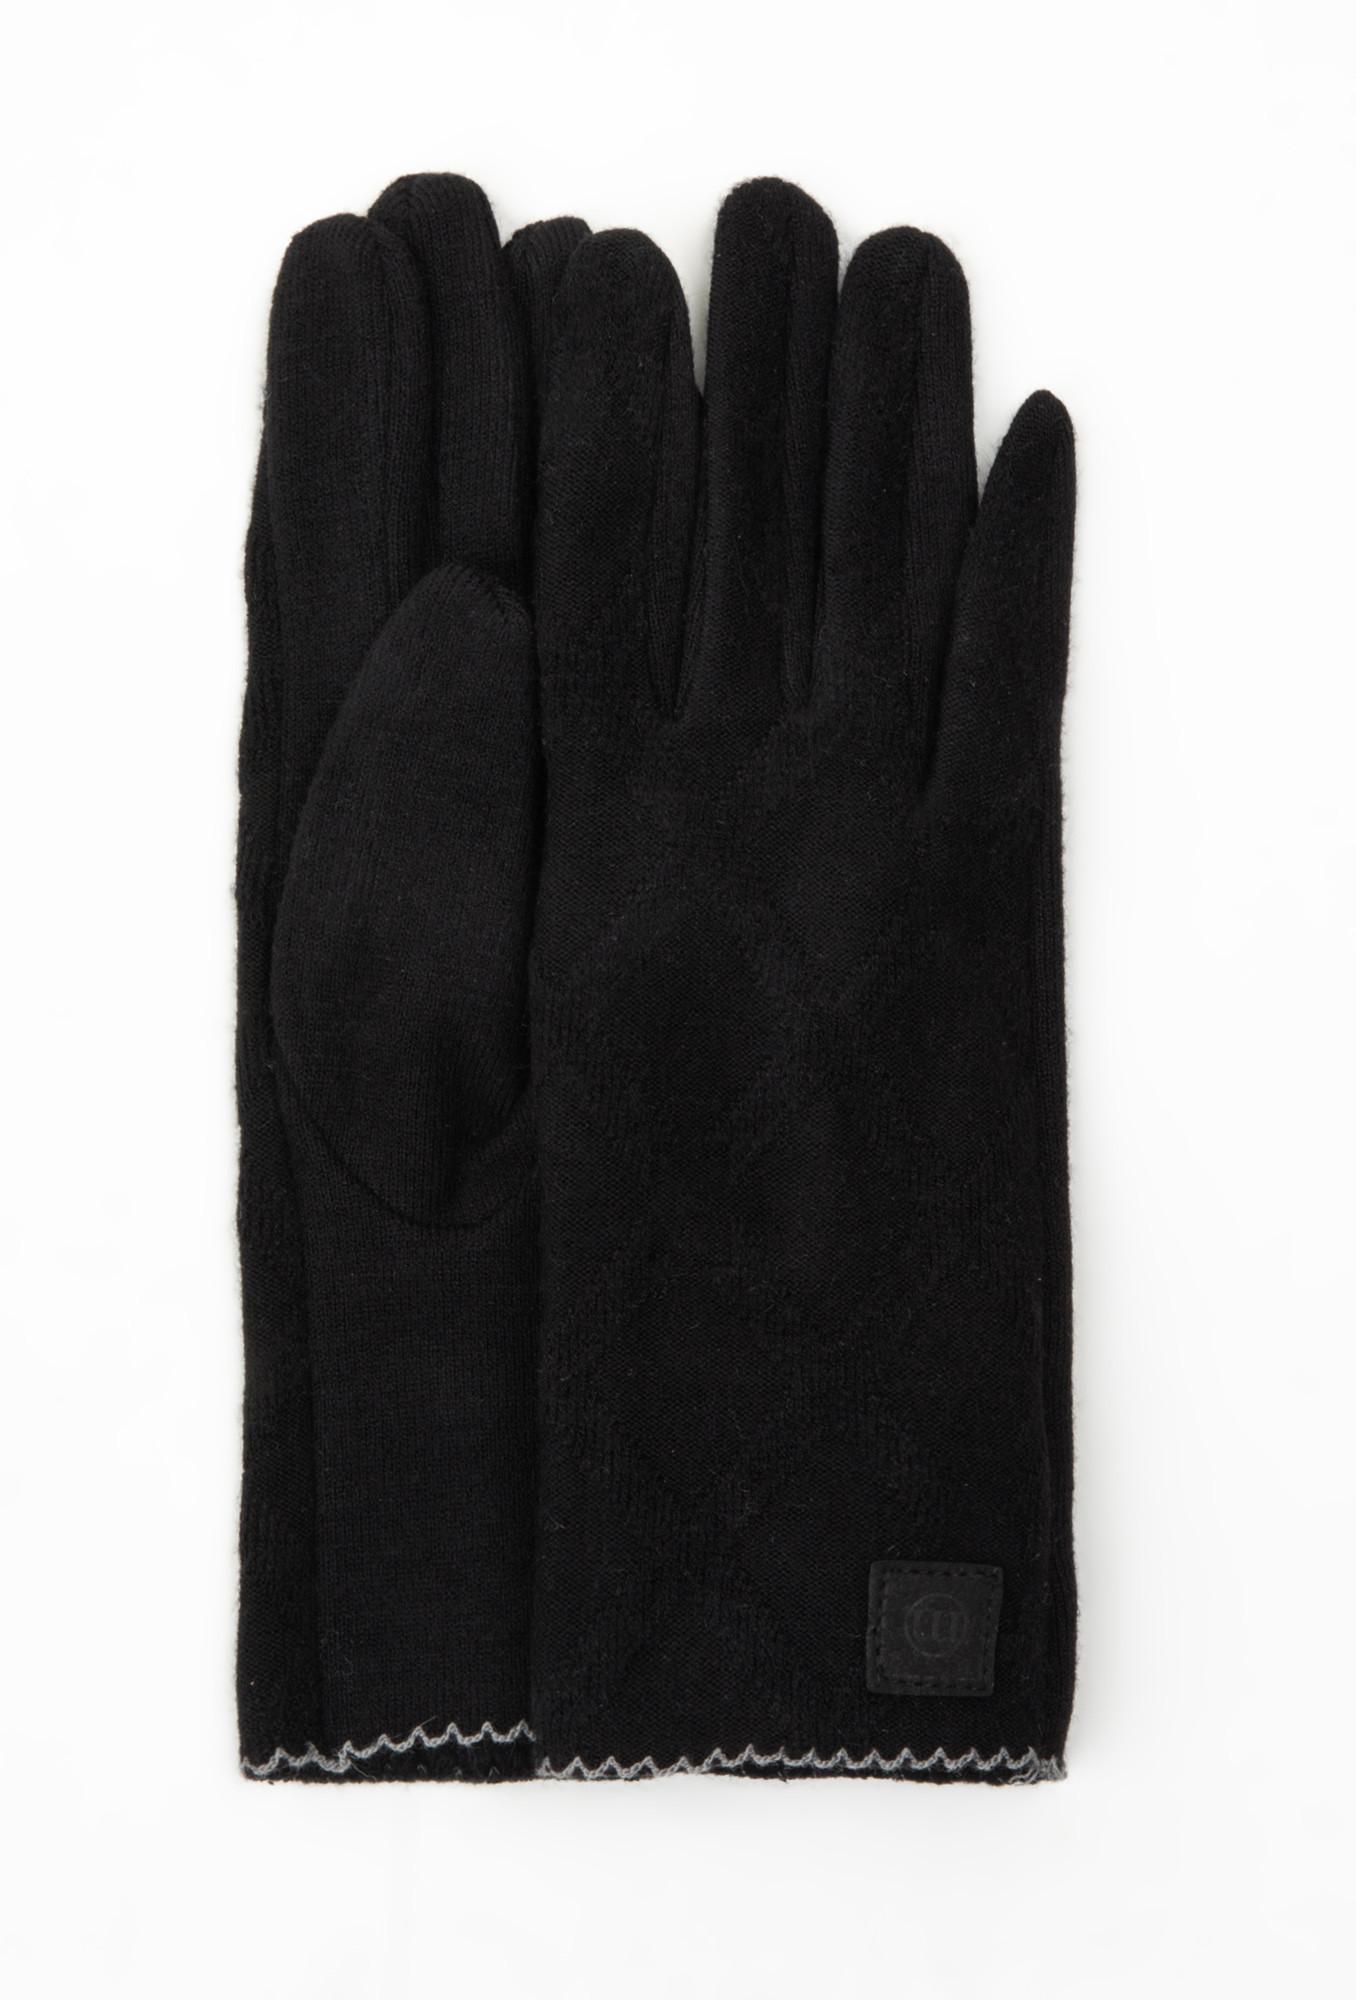 Monnari Rukavice Dámské pletené rukavice Black L/XL